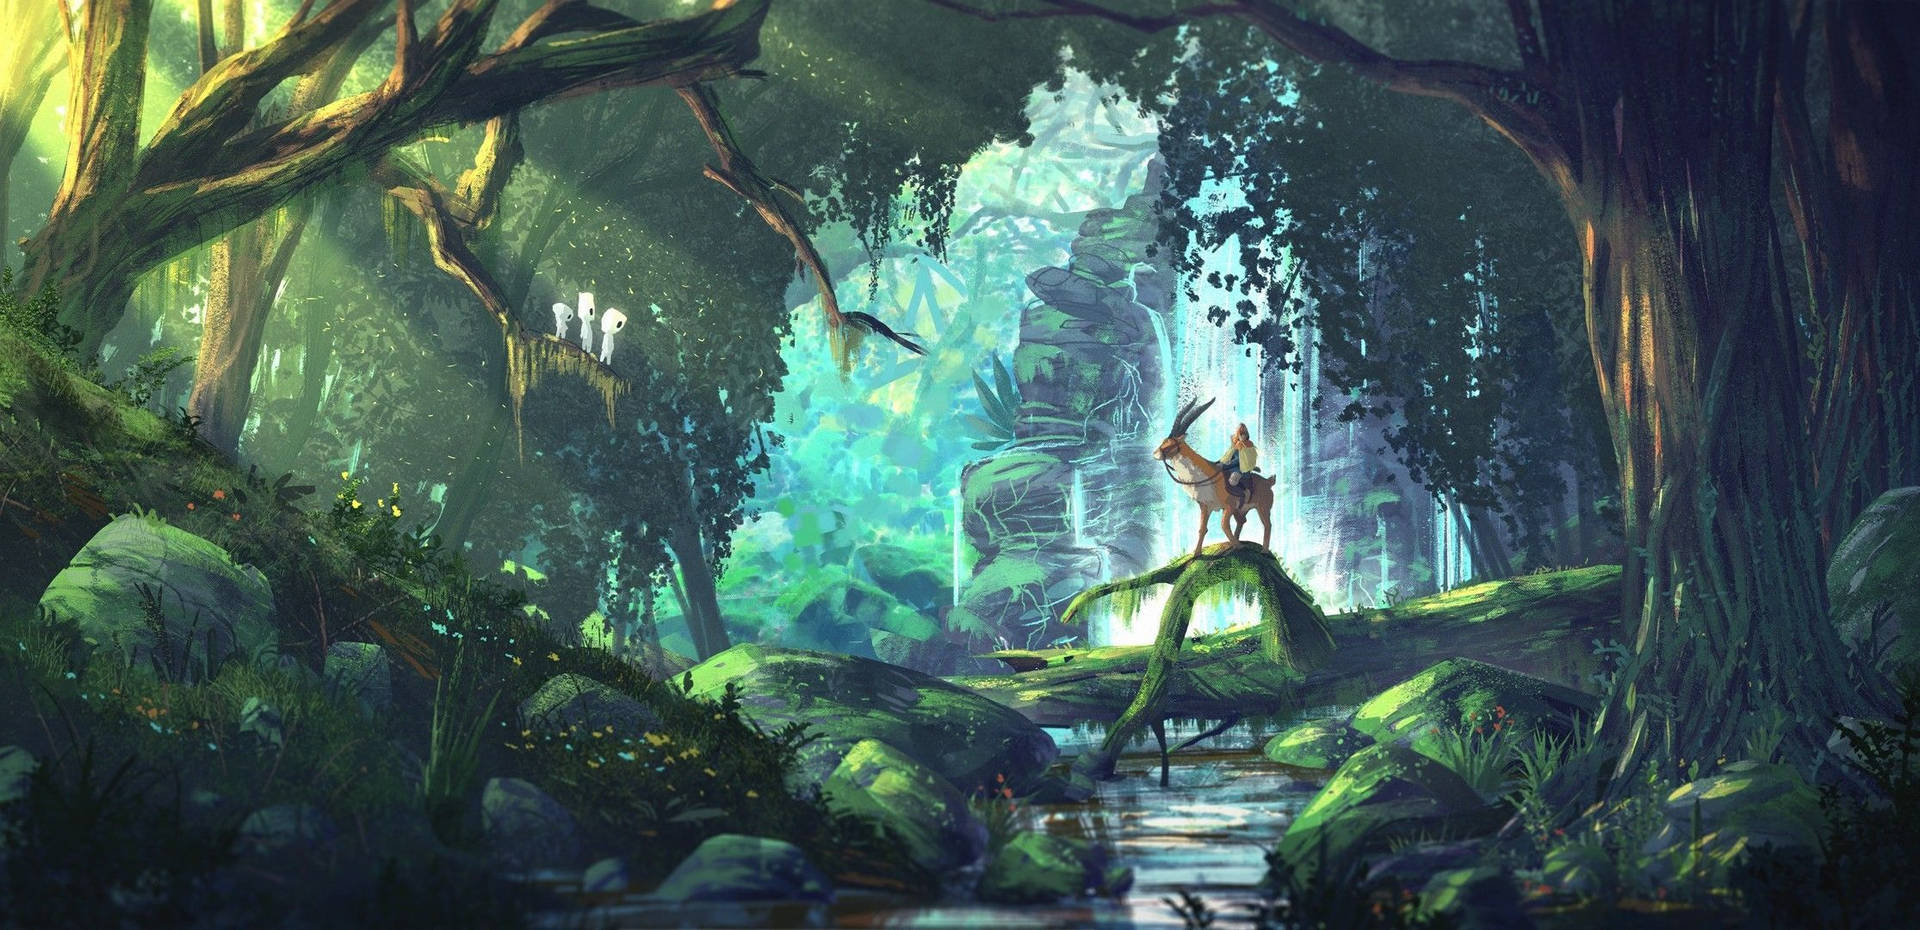 Ashitaka embracing Yakul in the lush forest of Princess Mononoke Wallpaper